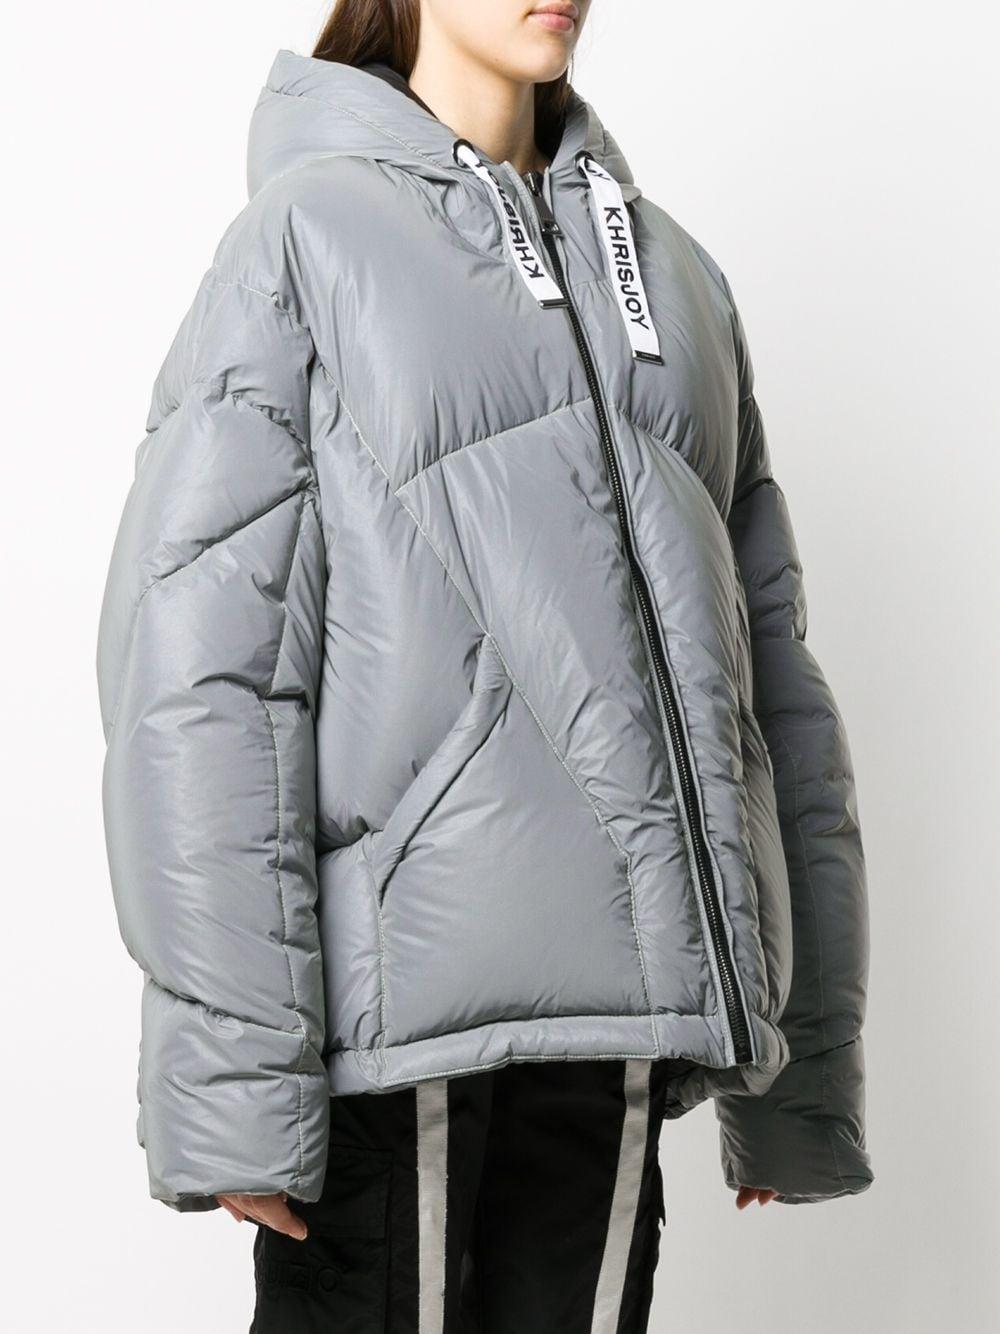 Khrisjoy Synthetic Oversized Puffer Jacket in Grey (Gray) - Lyst